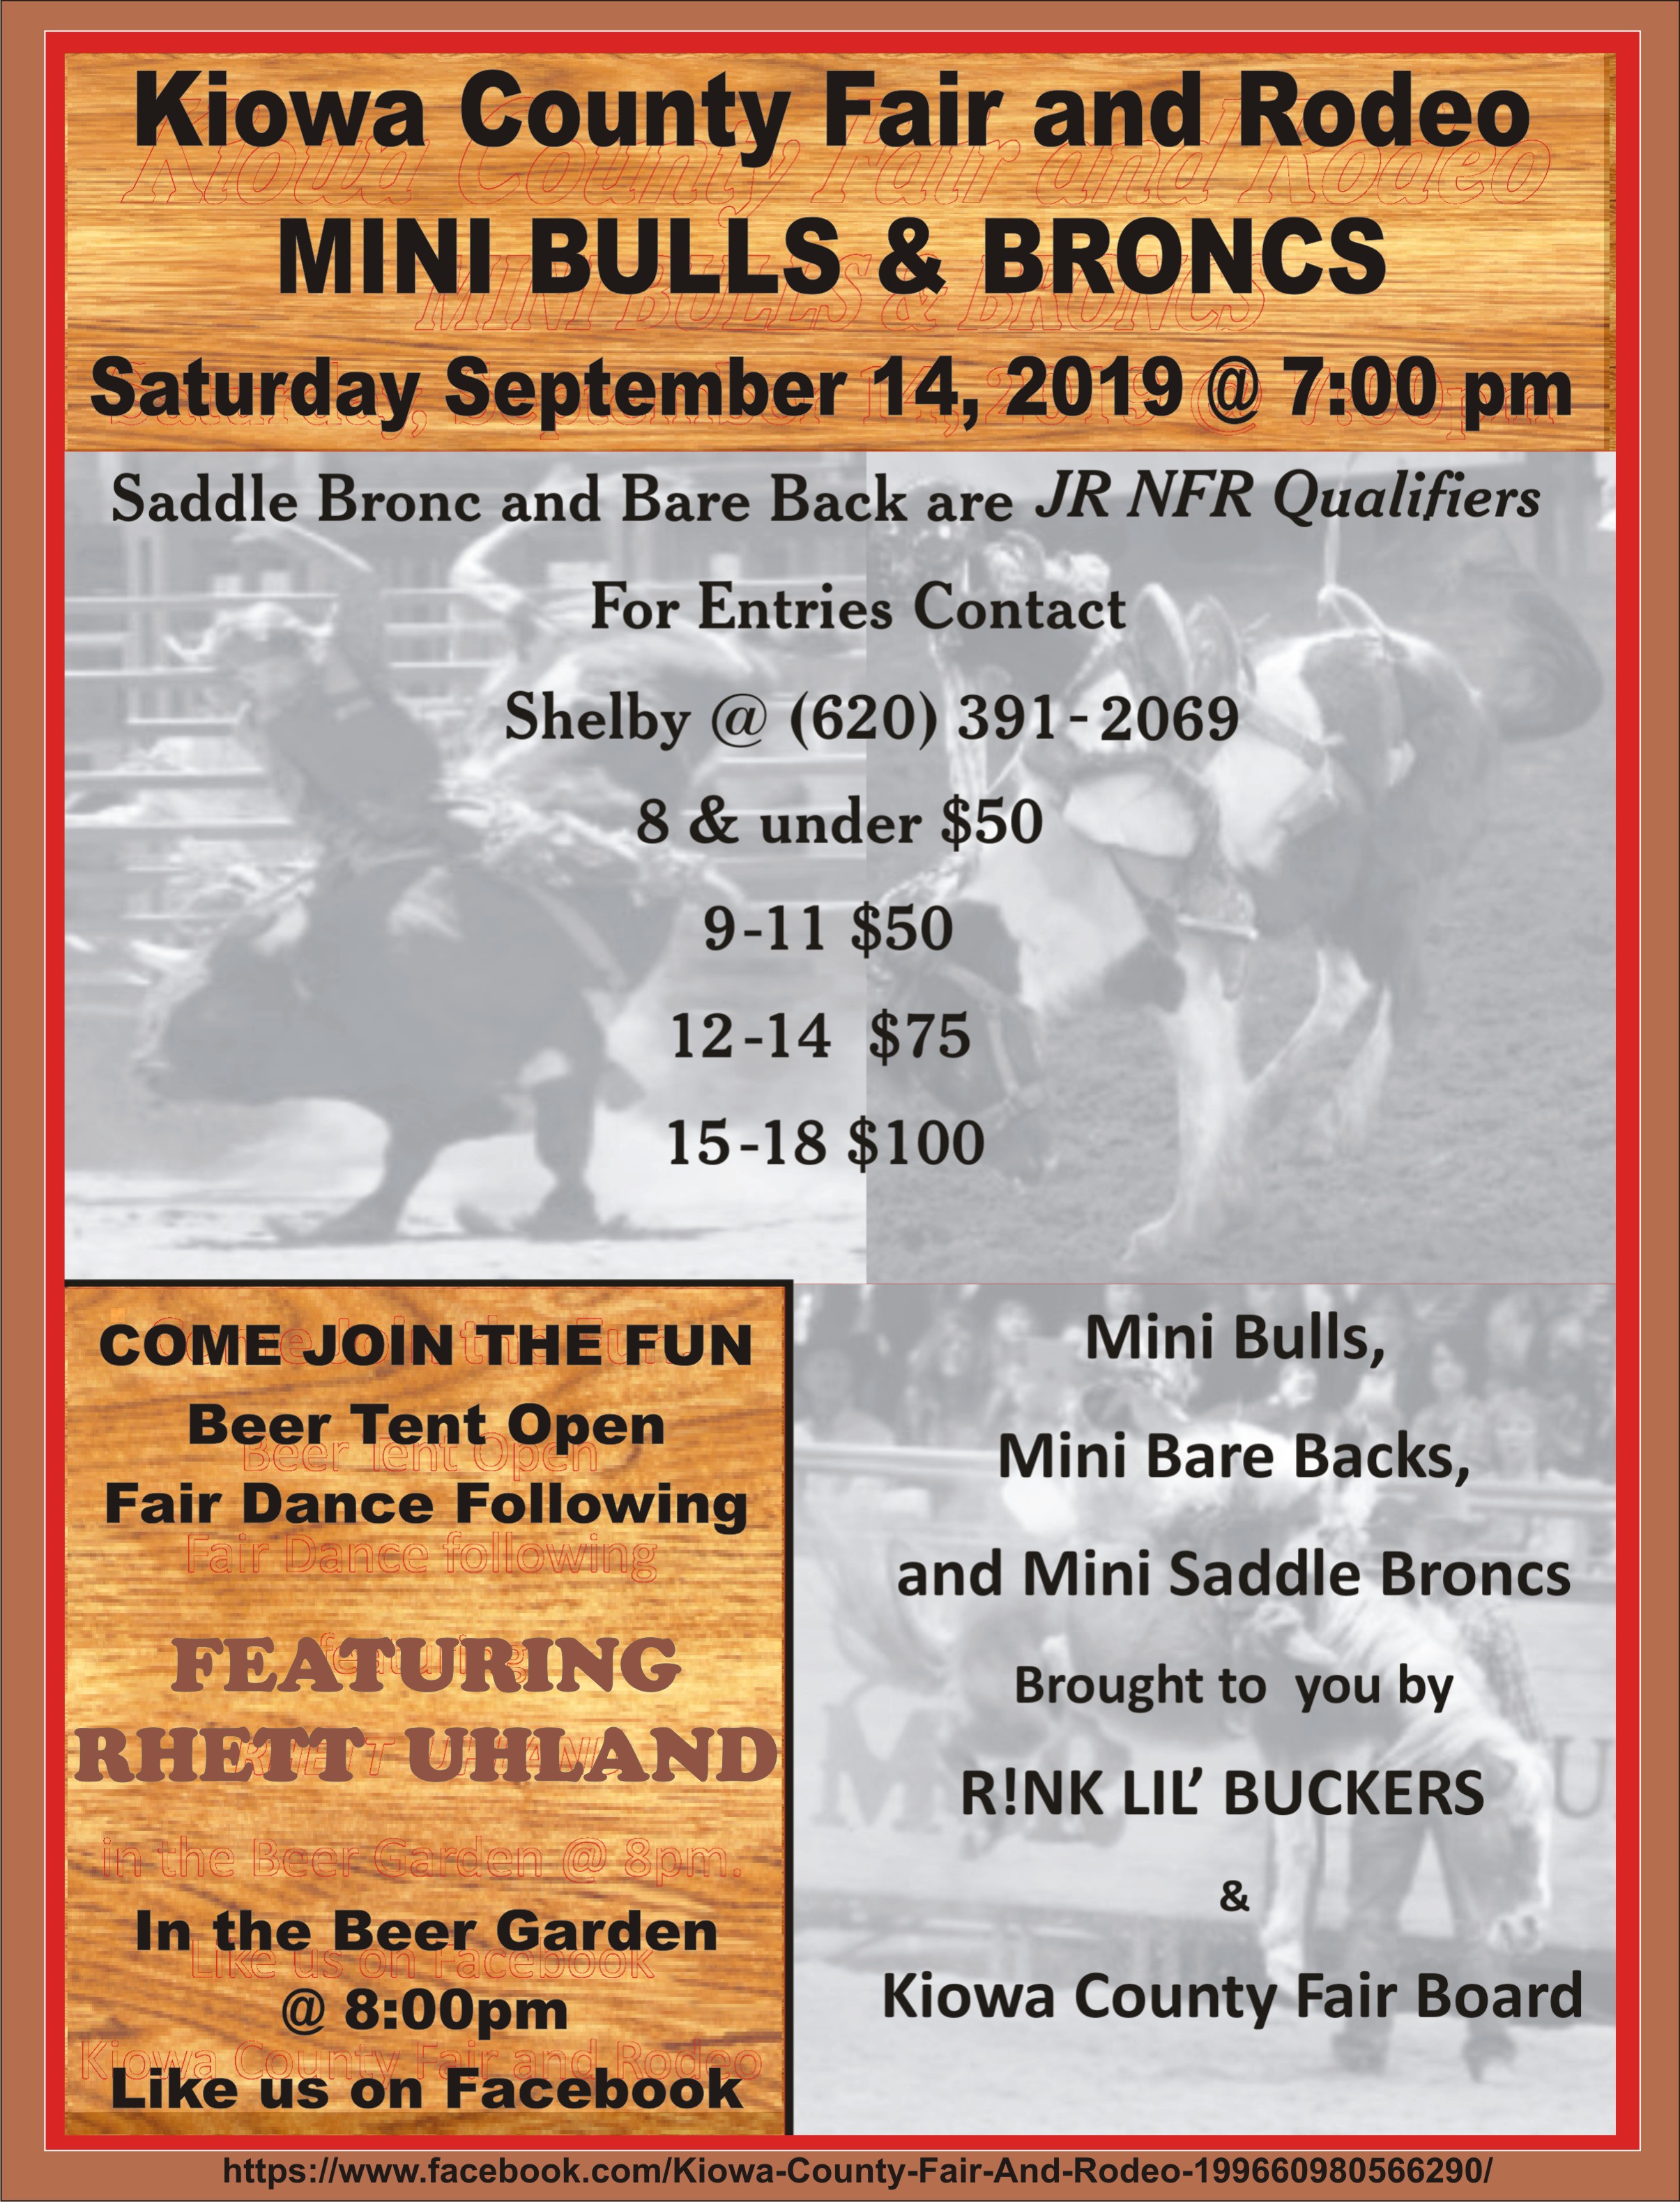 2019 Kiowa County Fair Mini Bulls & Broncs Kiowa County Press